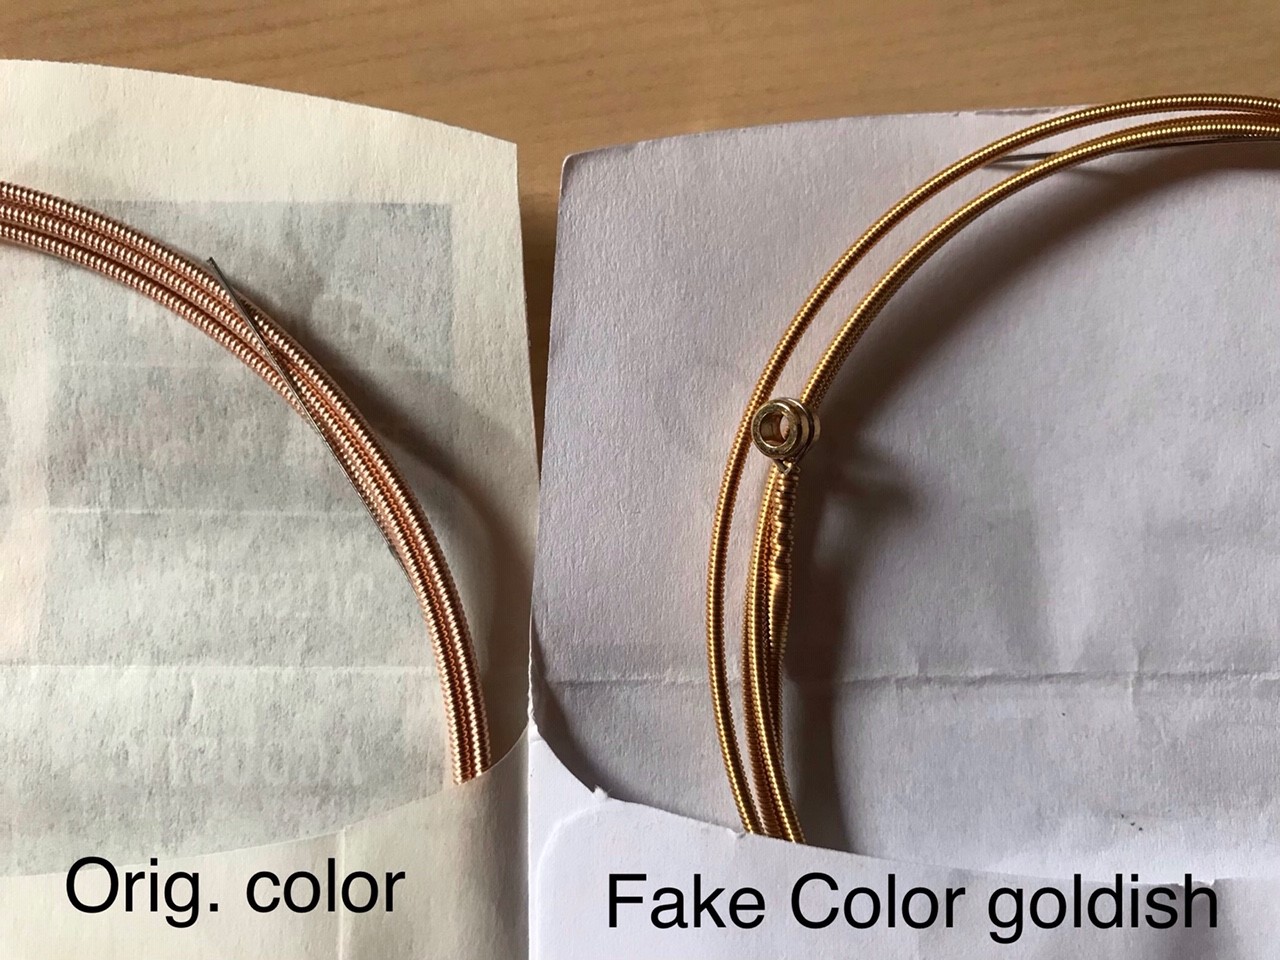 Bronzene Farbe beim Original, goldener Schimmer beim Fake